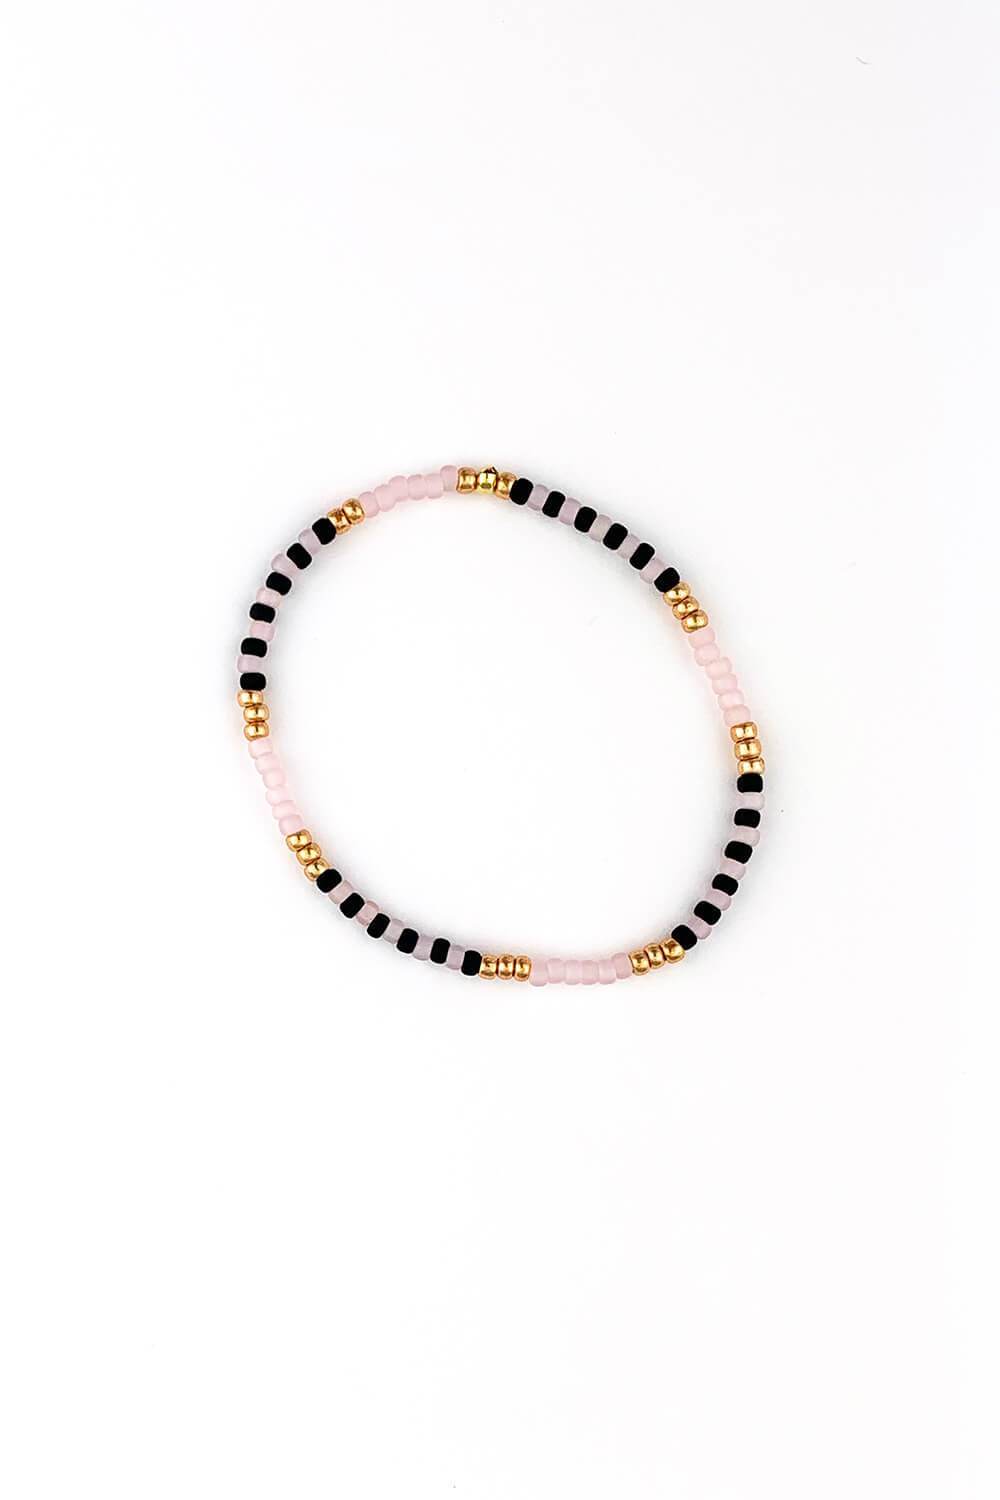 Bracelet Stackables - Sarah Marie Design Studio